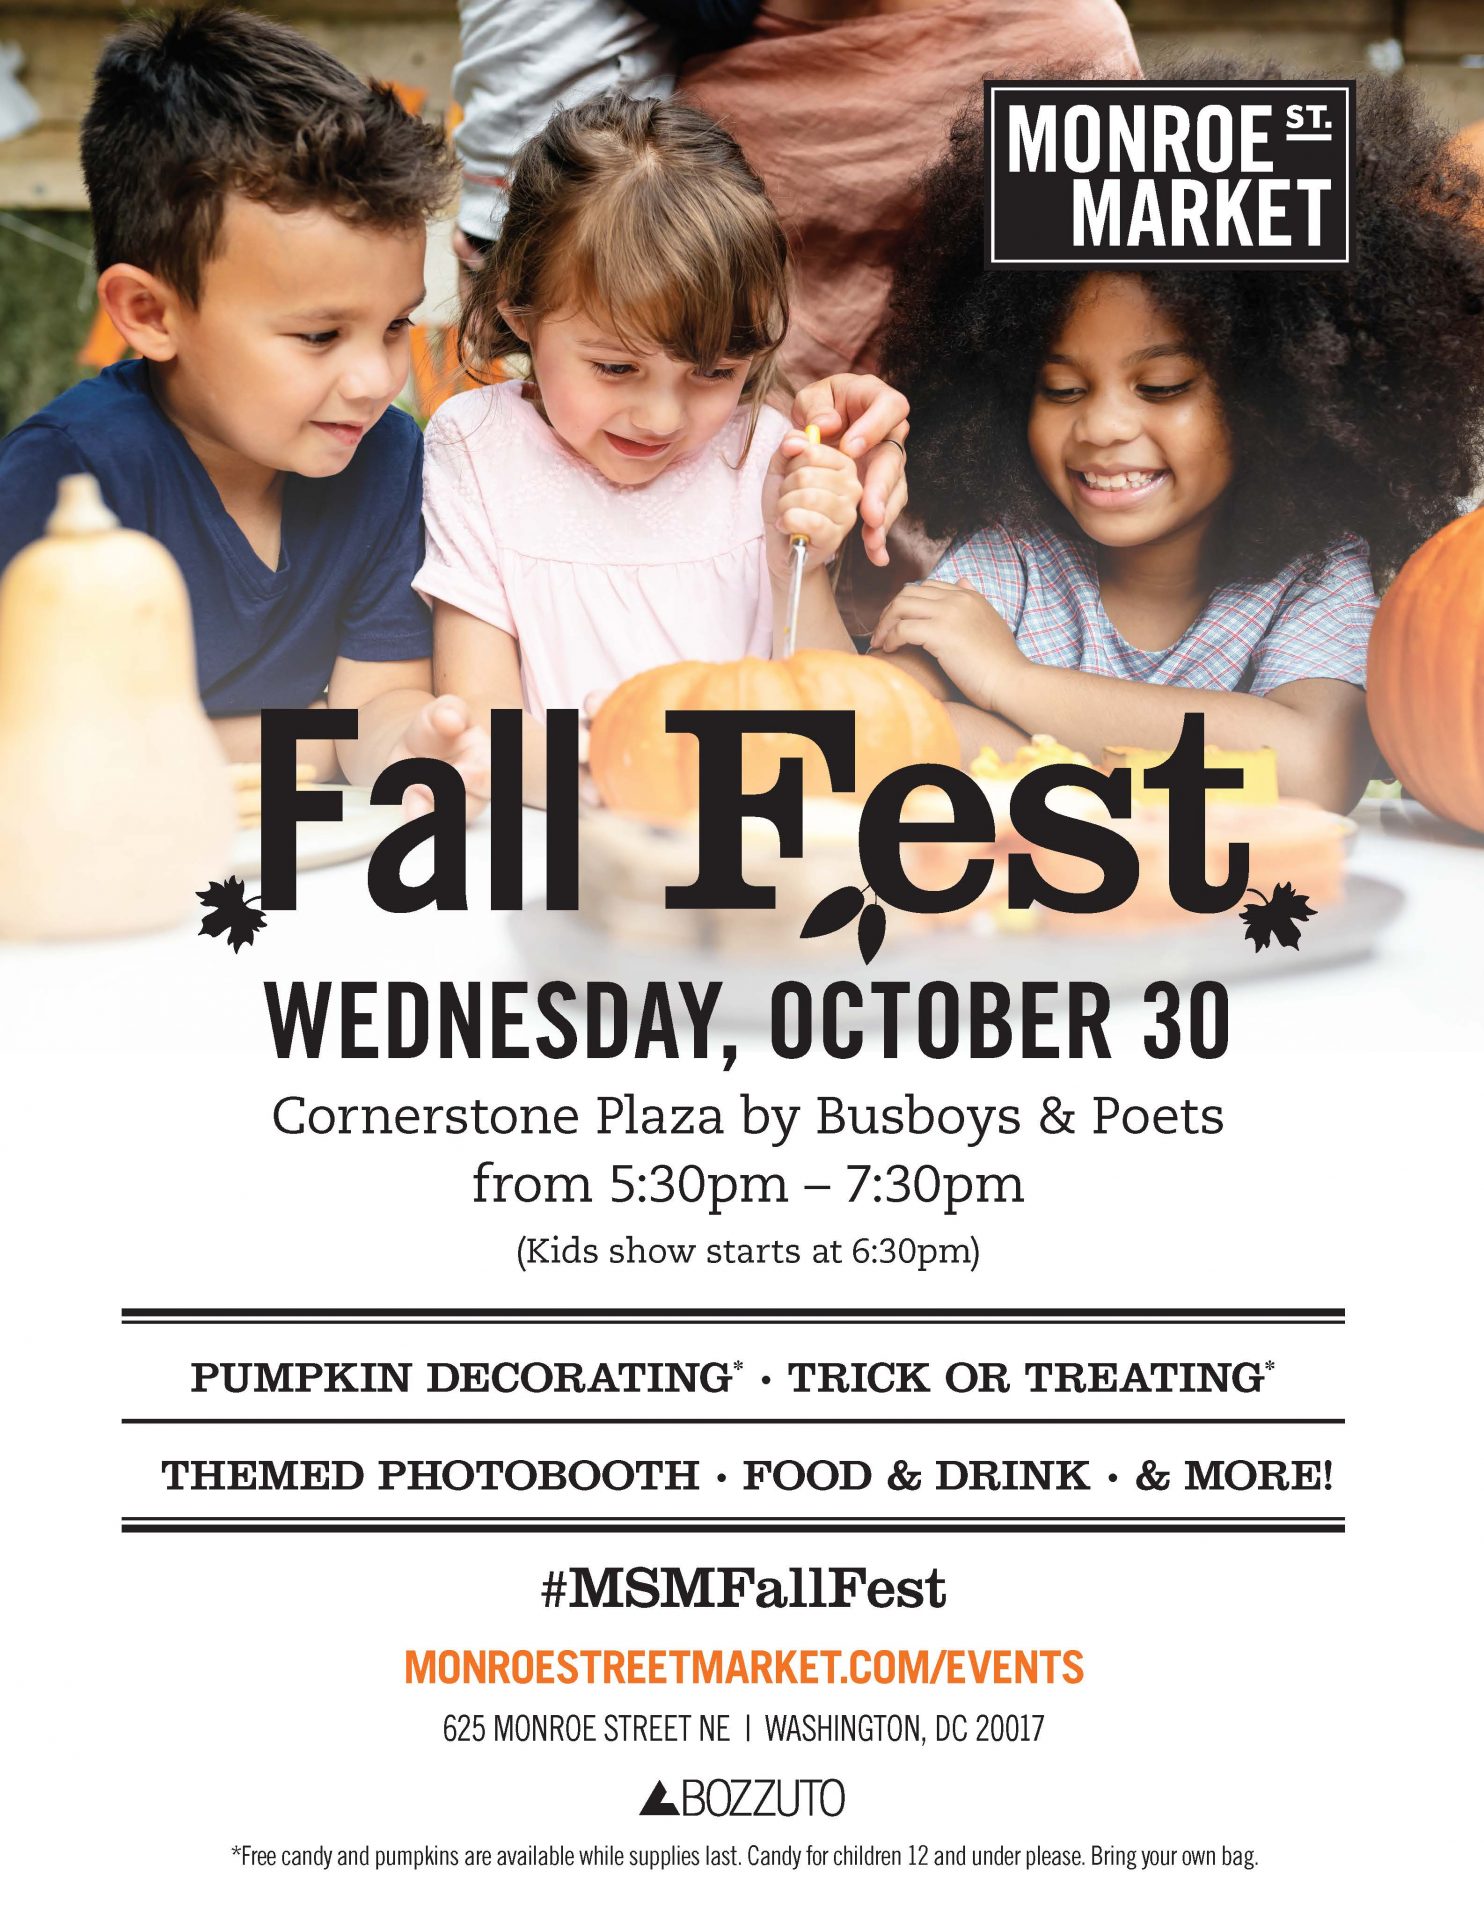 Fall Fest at Monroe Street Market